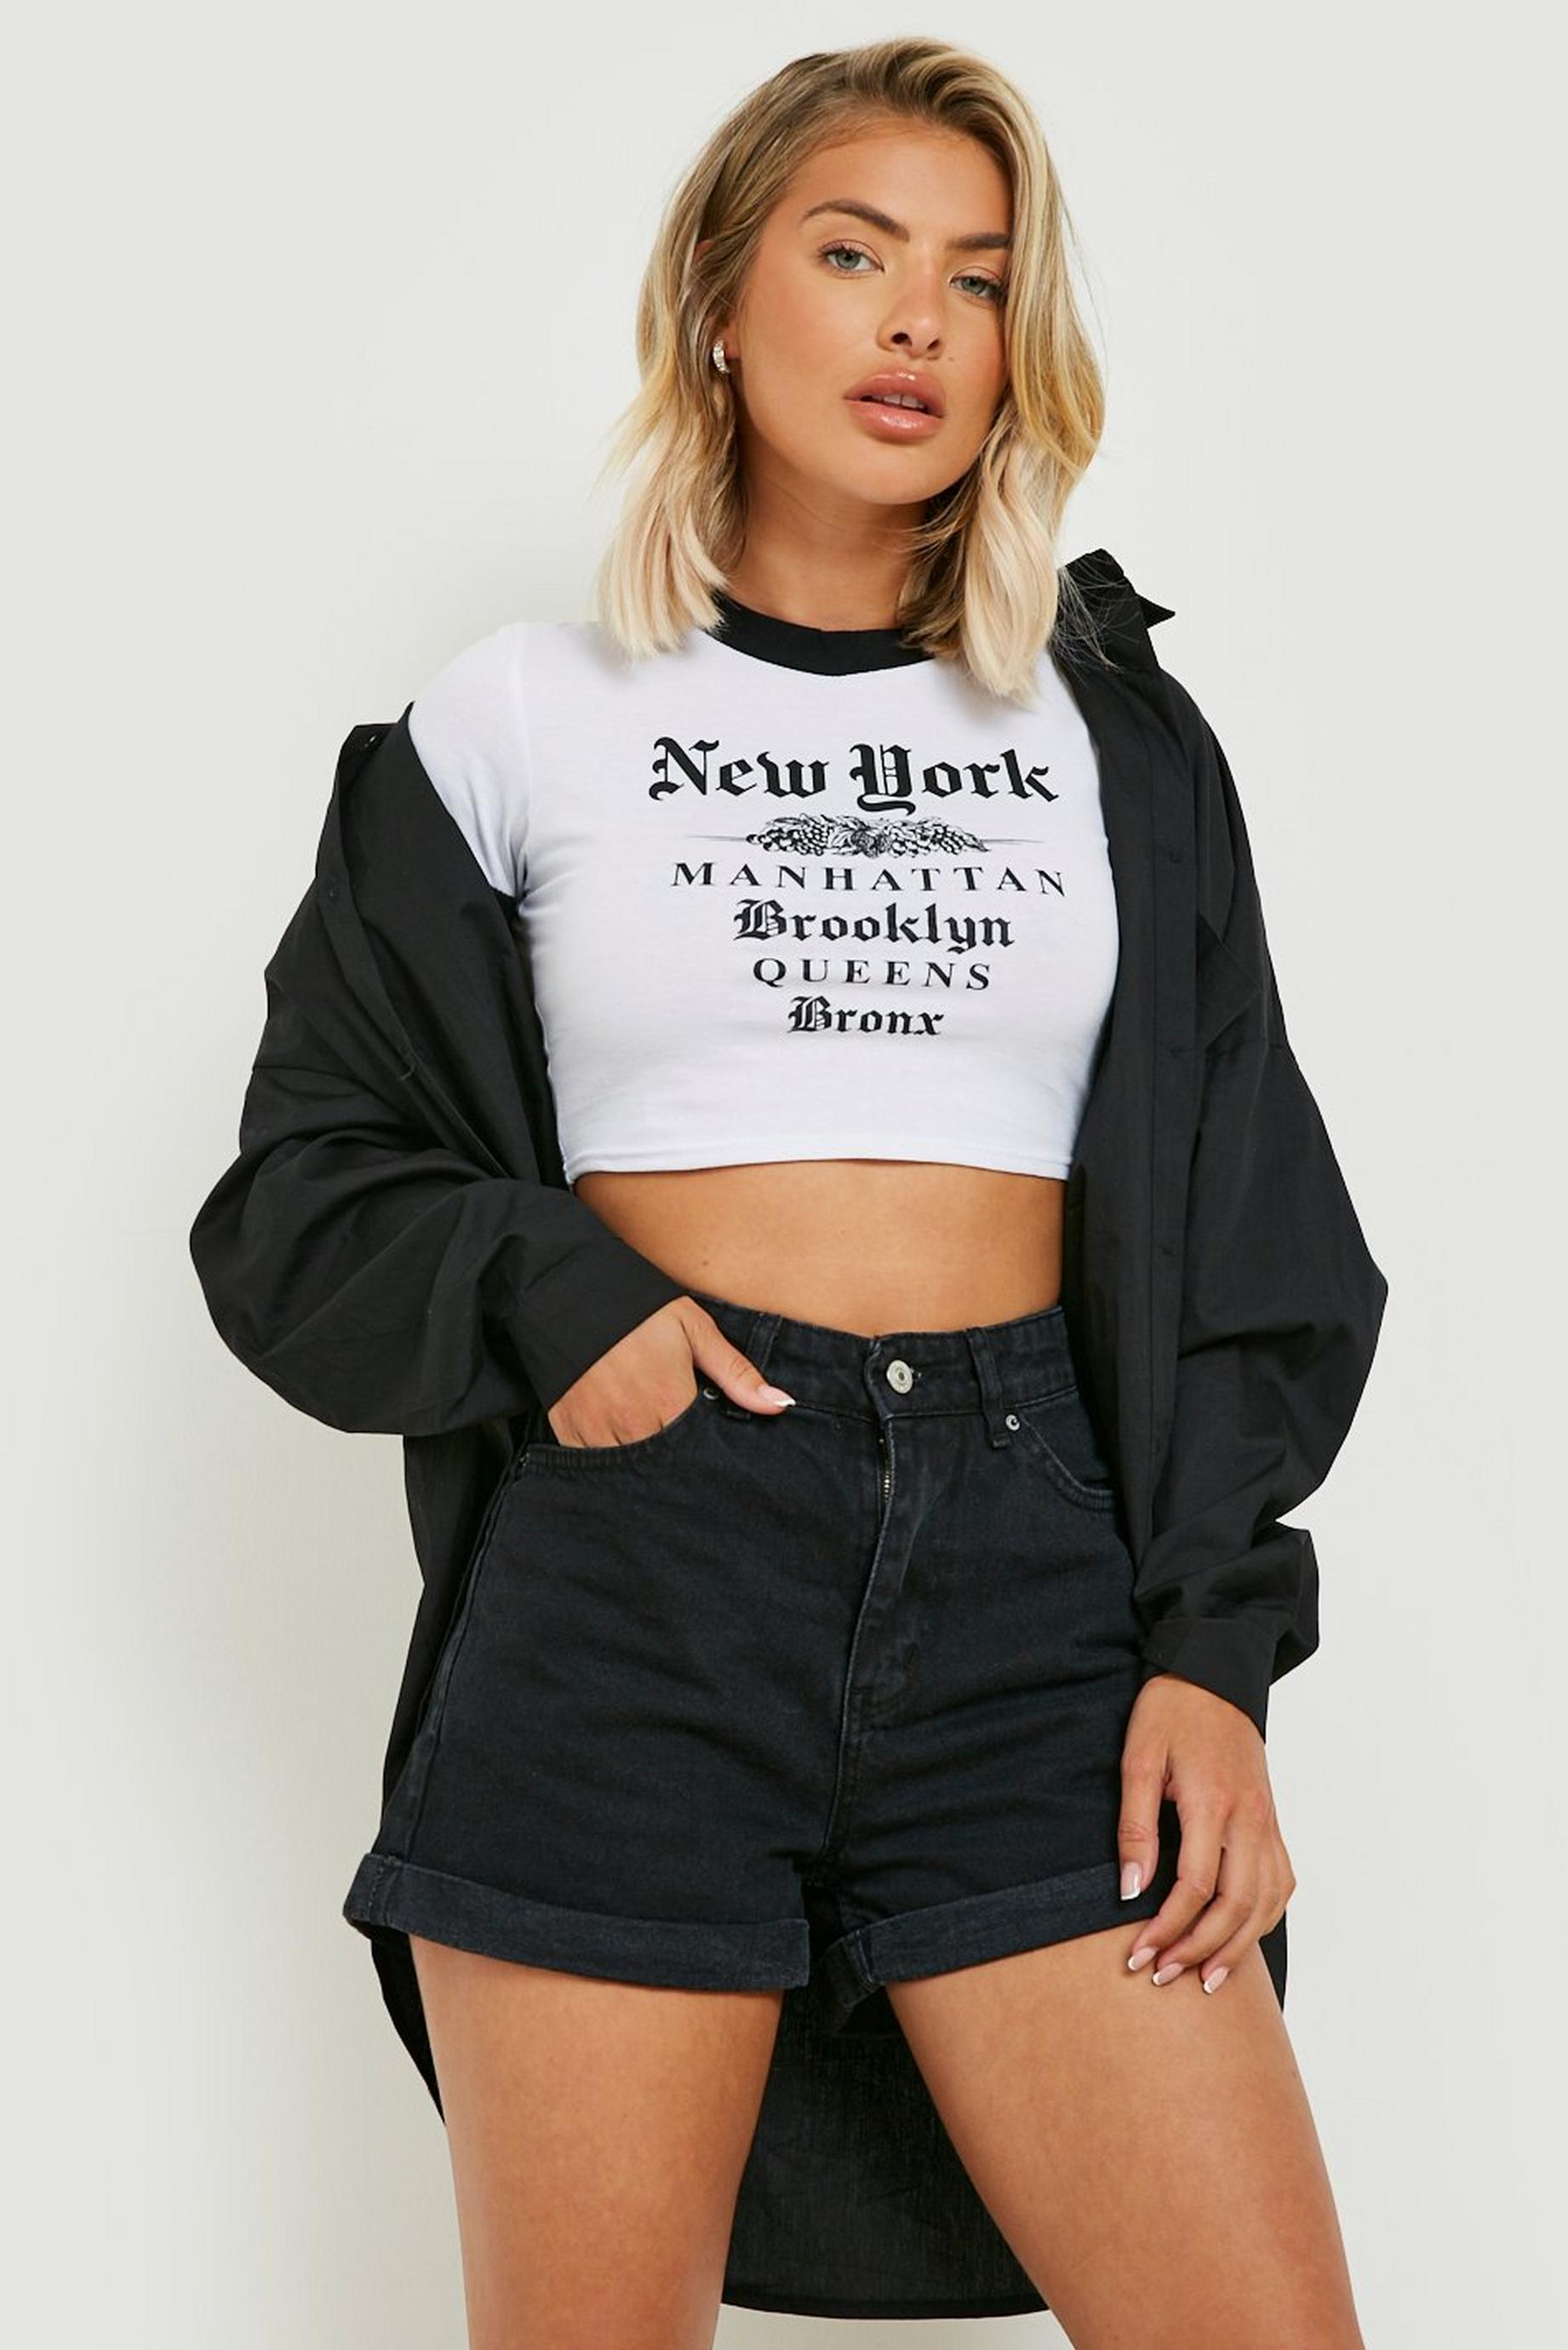 Kurzes Ringer T-Shirt mit New York Print